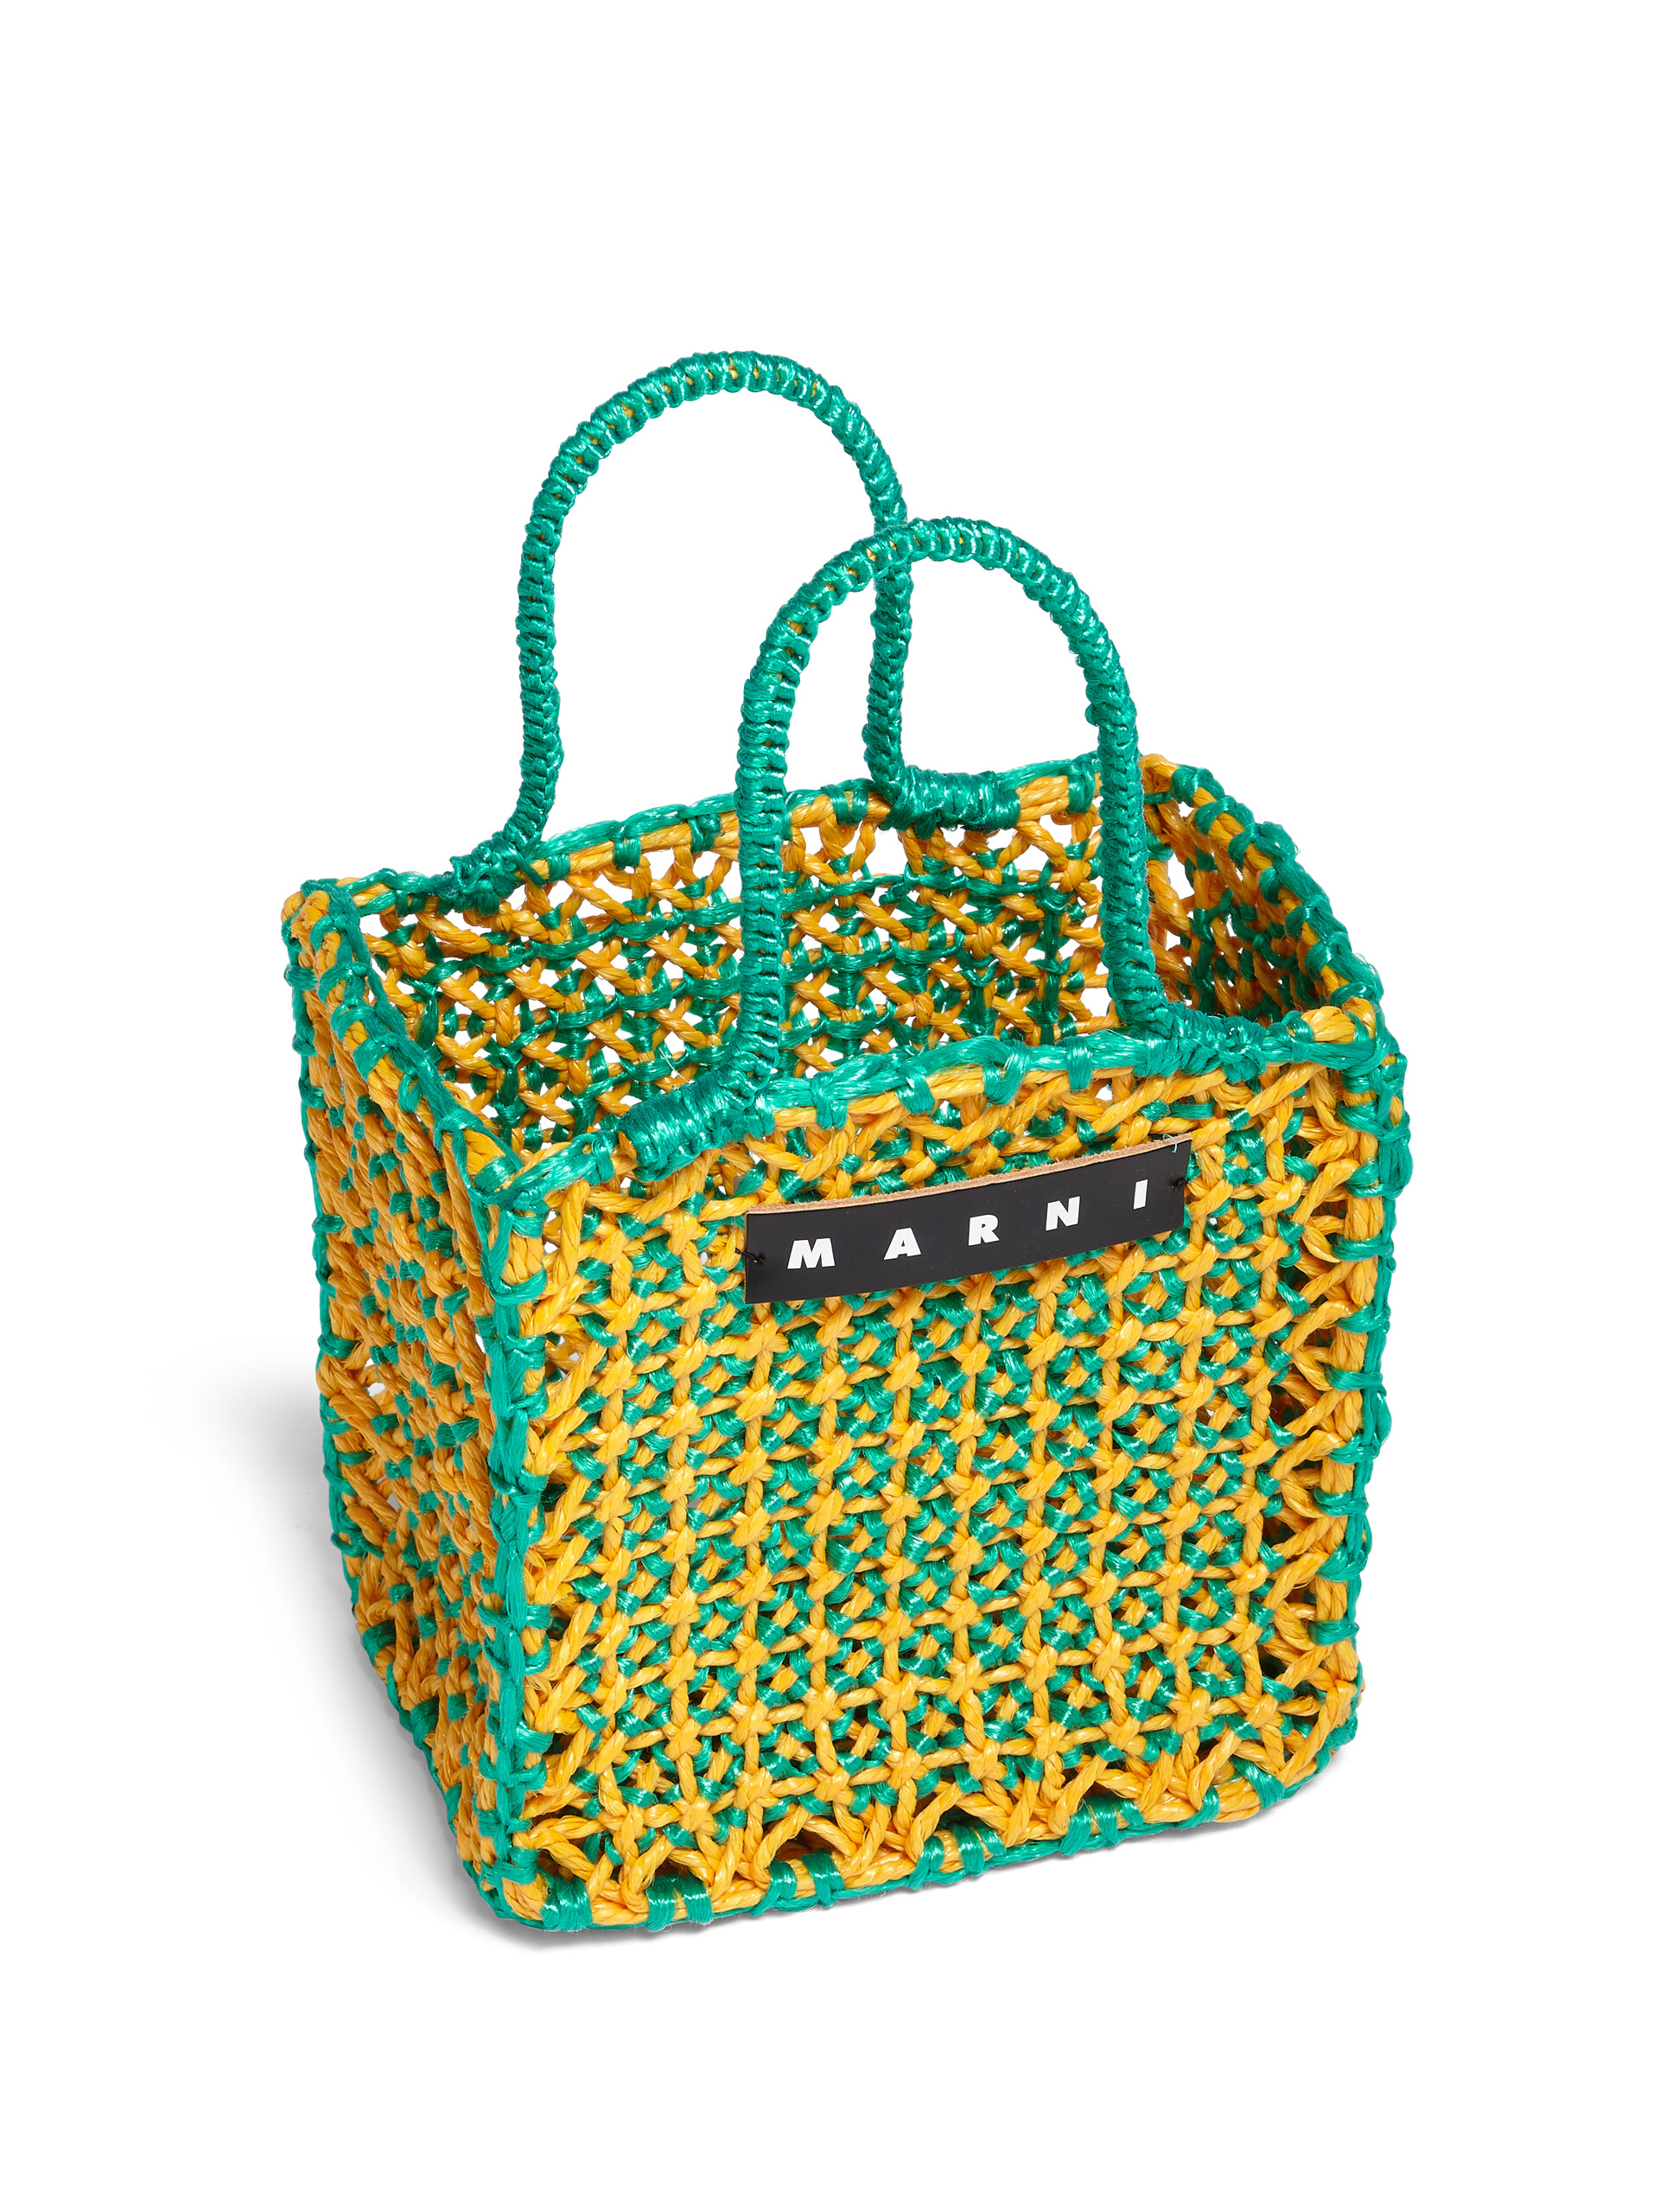 MARNI MARKET JURTA small bag in green and yellow crochet - Shopping Bags - Image 4